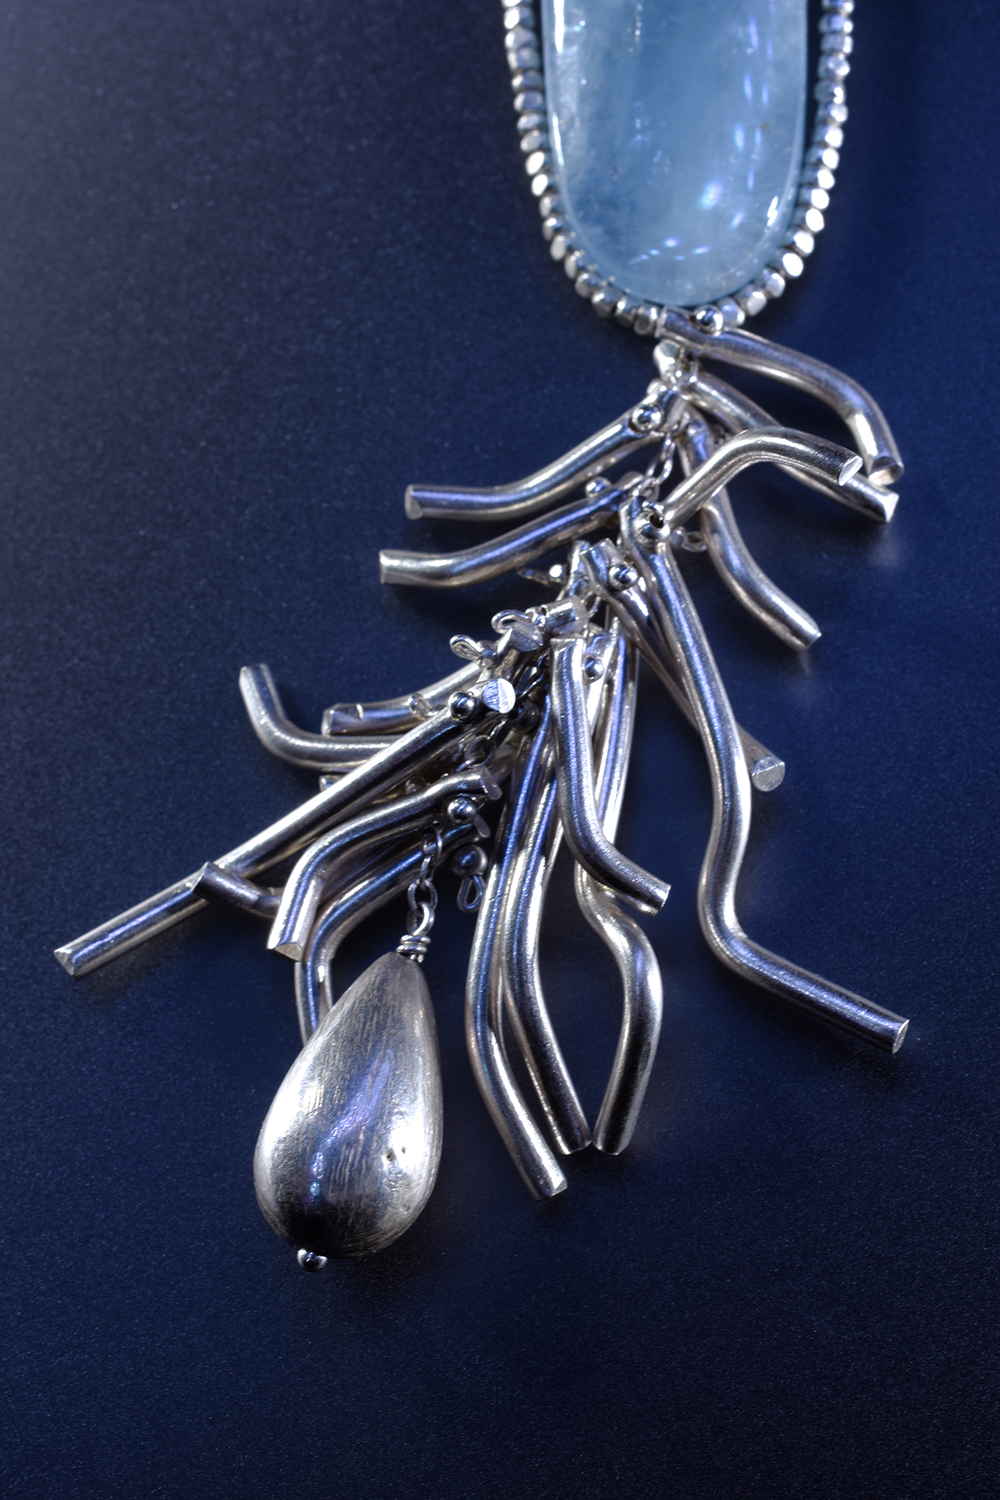 Aquamarine Pendant Necklace with Fine Silver Tassel